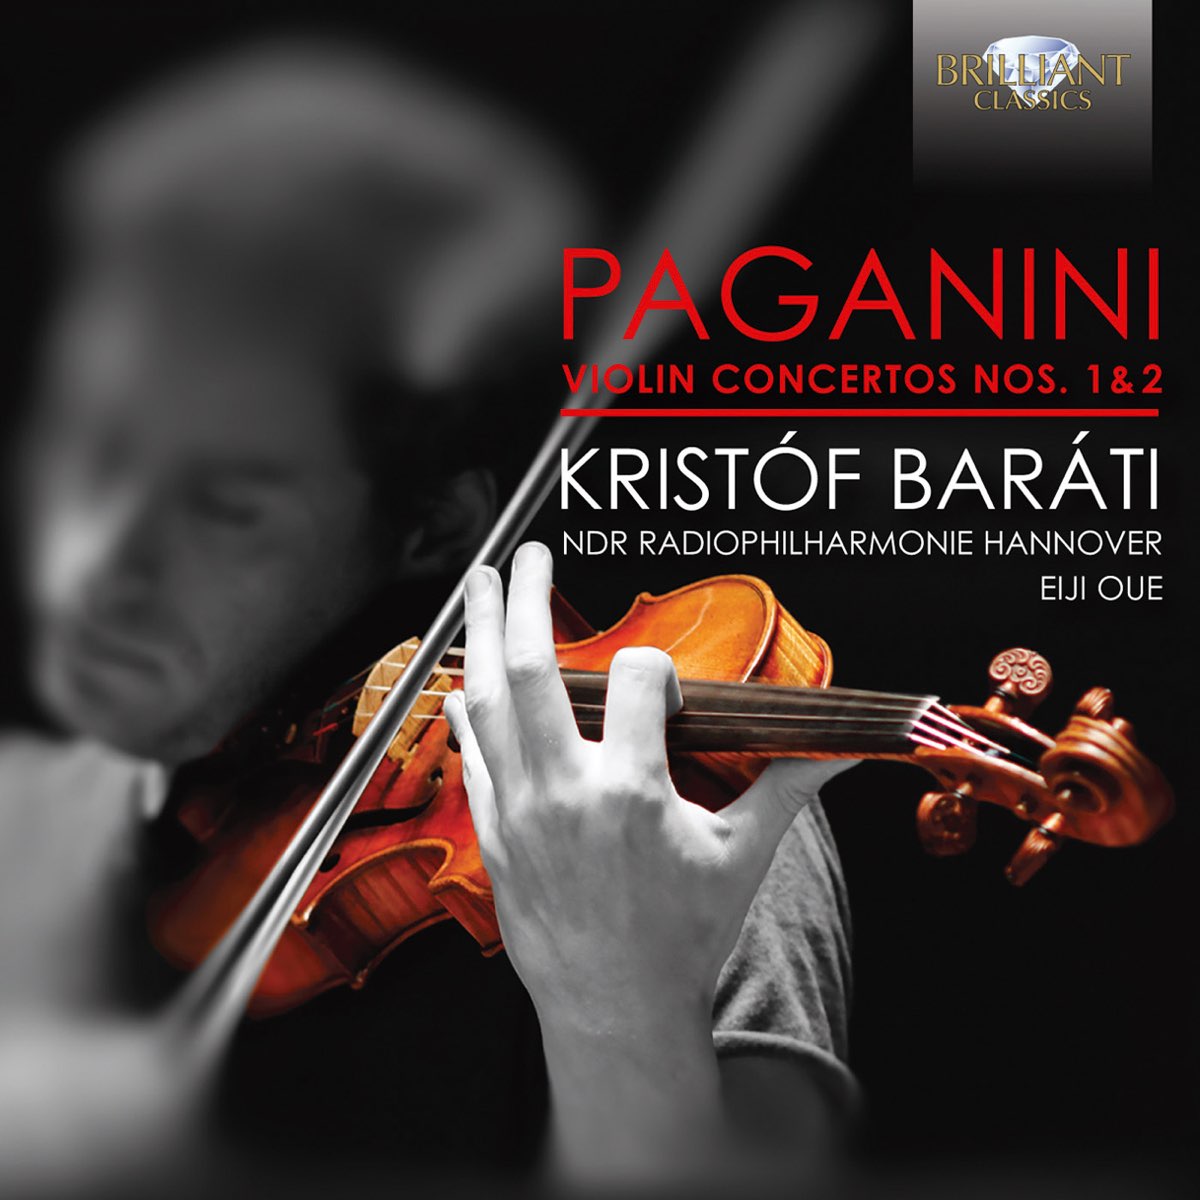 Violin concerto no 2. Niccolo Paganini Violin Concerto. La Campanella Никколо Паганини. Paganini Violin Concerto no 2. Скрипка Паганини.